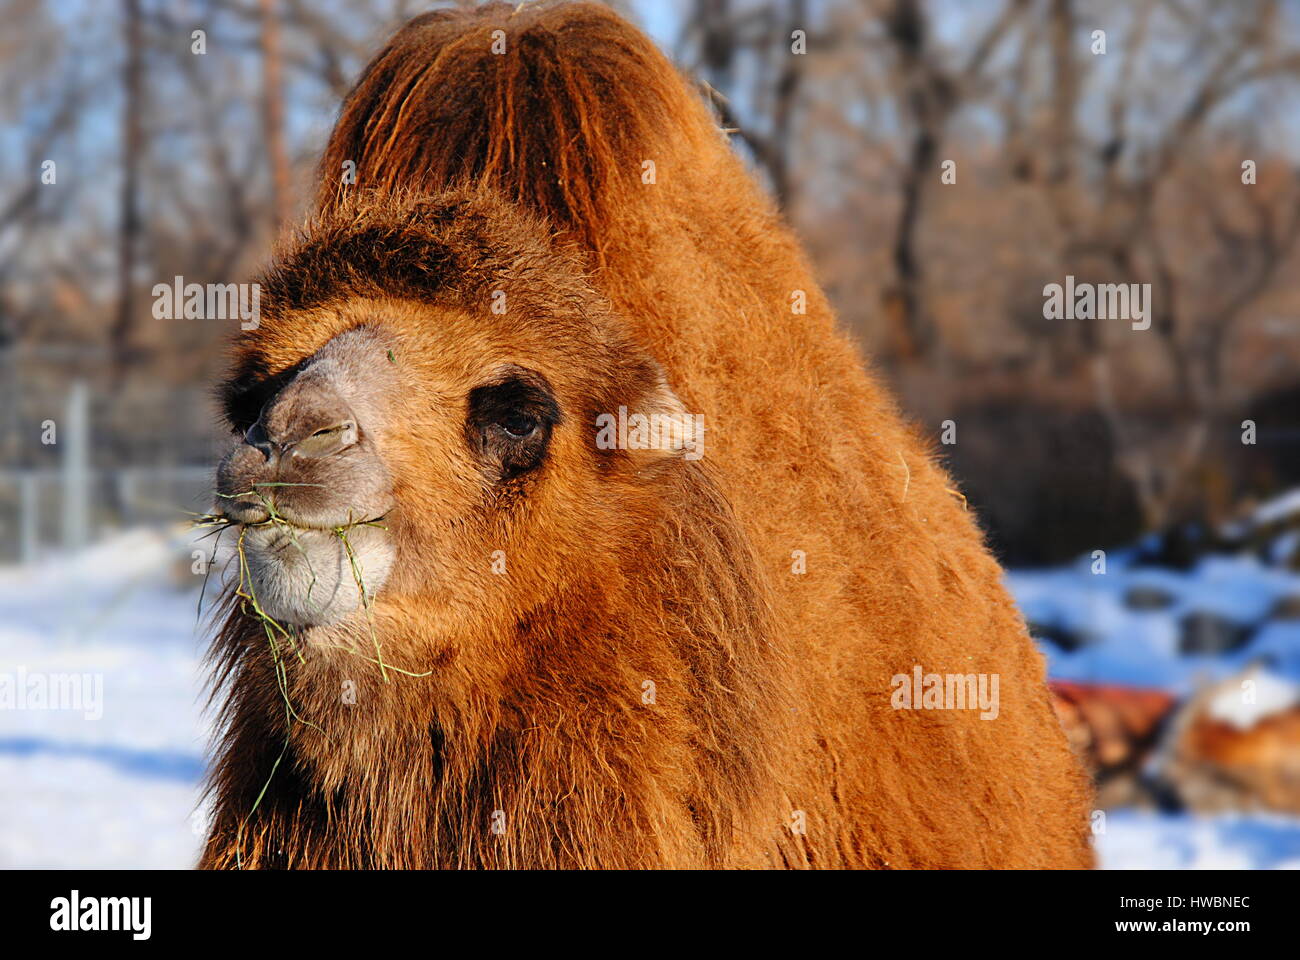 Bactrian camel eating in lo zoo di Calgary, Canada Foto Stock